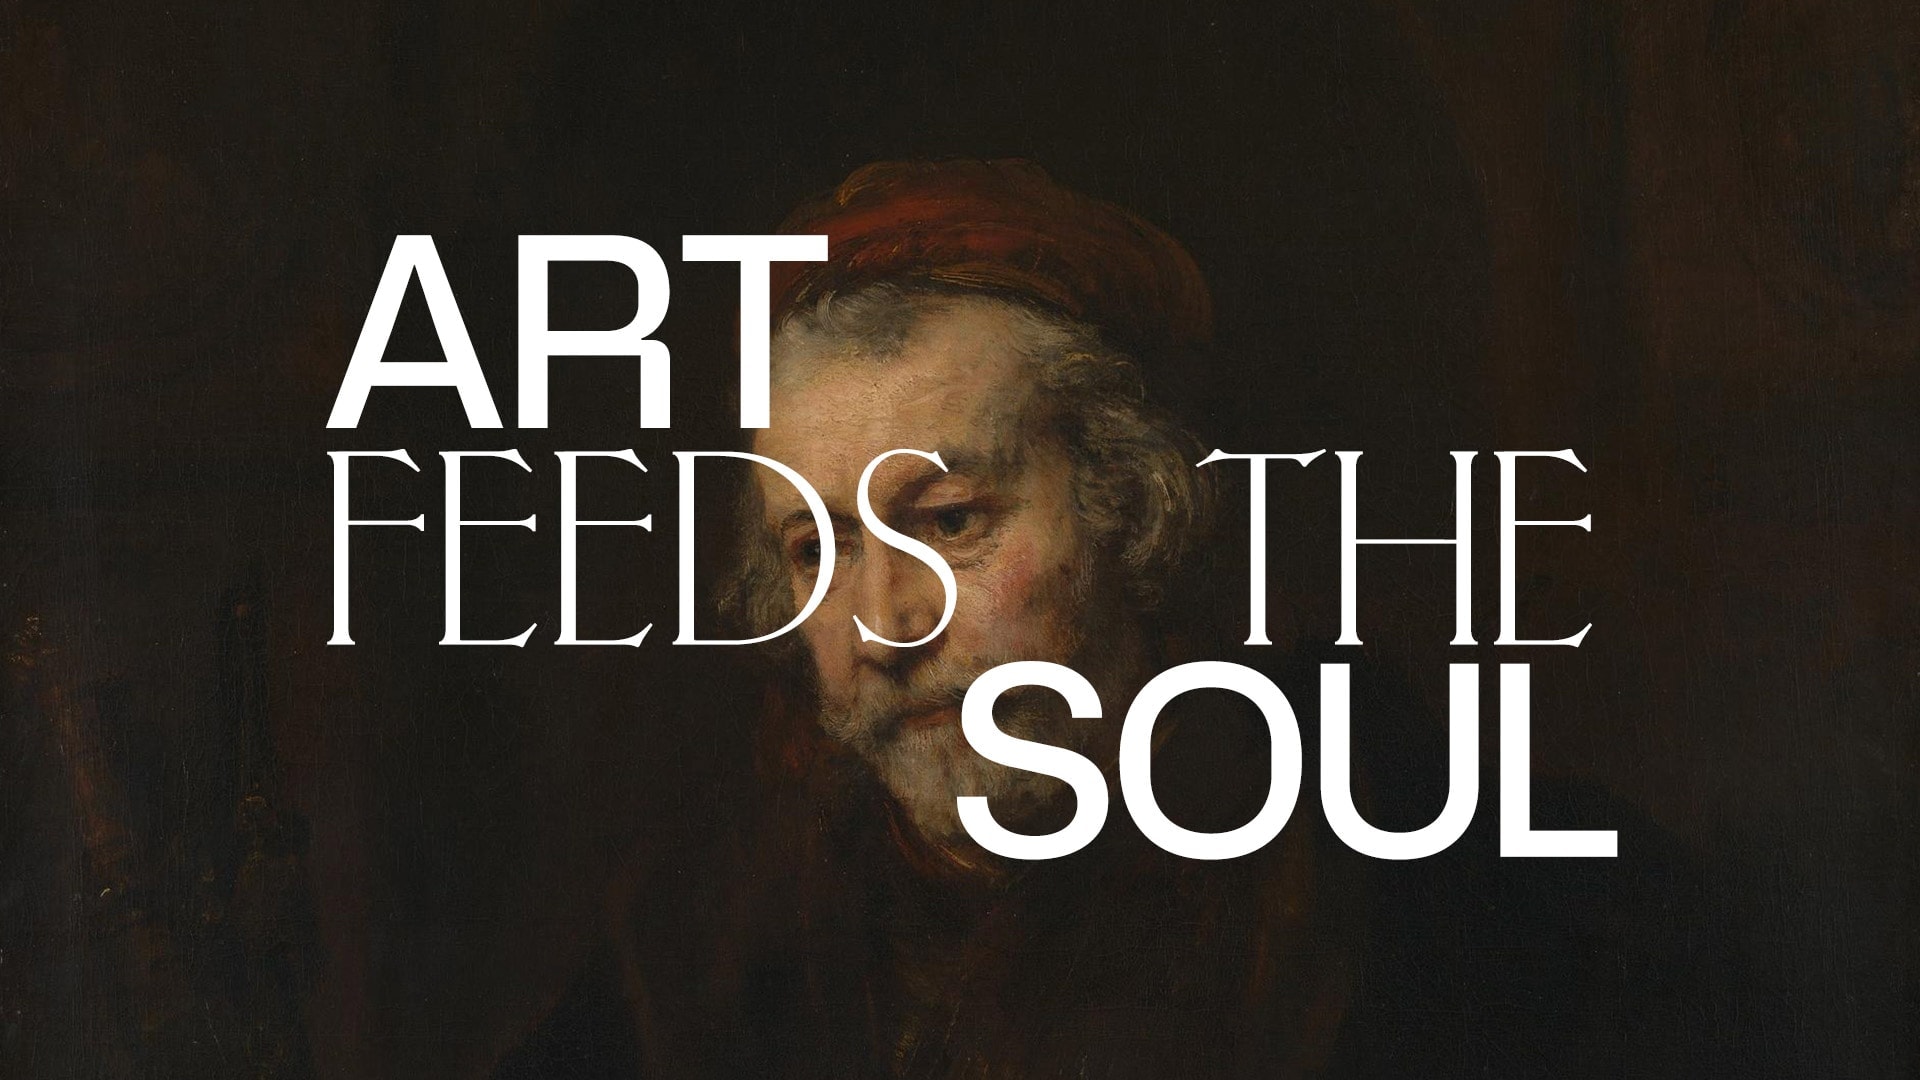 Art feeds the soul